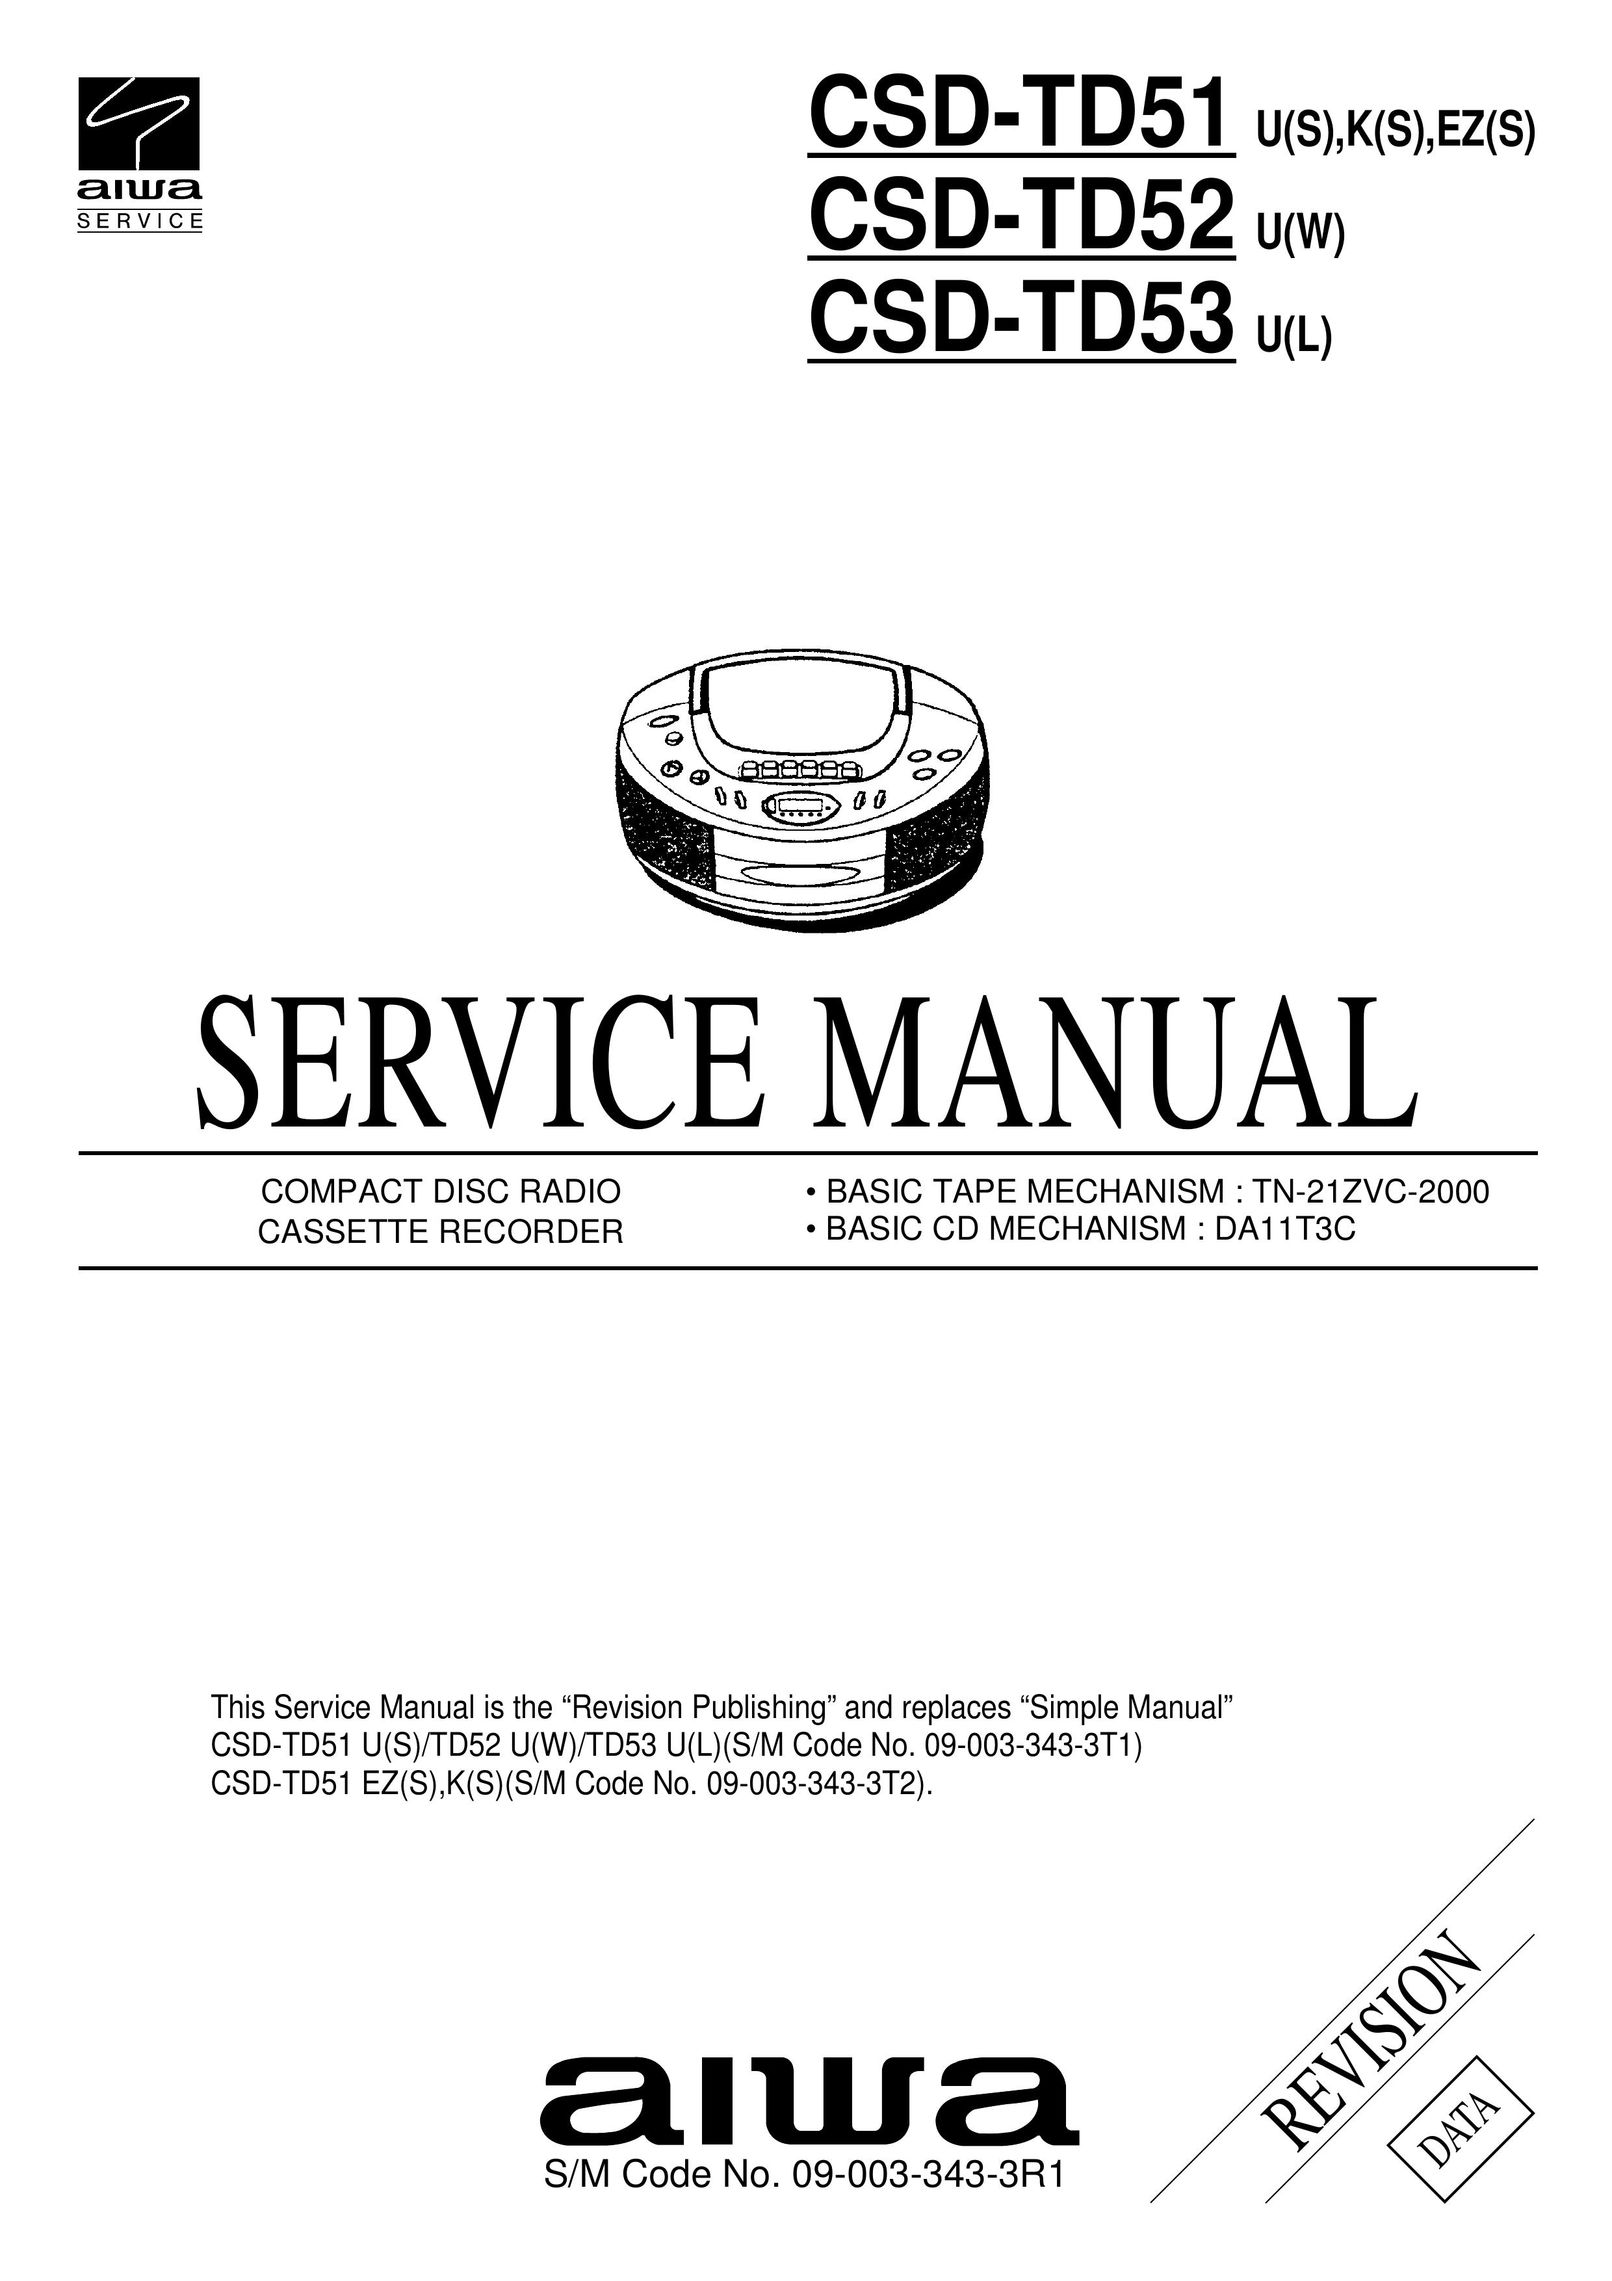 Aiwa CSD-TD53 CD Player User Manual (Page 1)